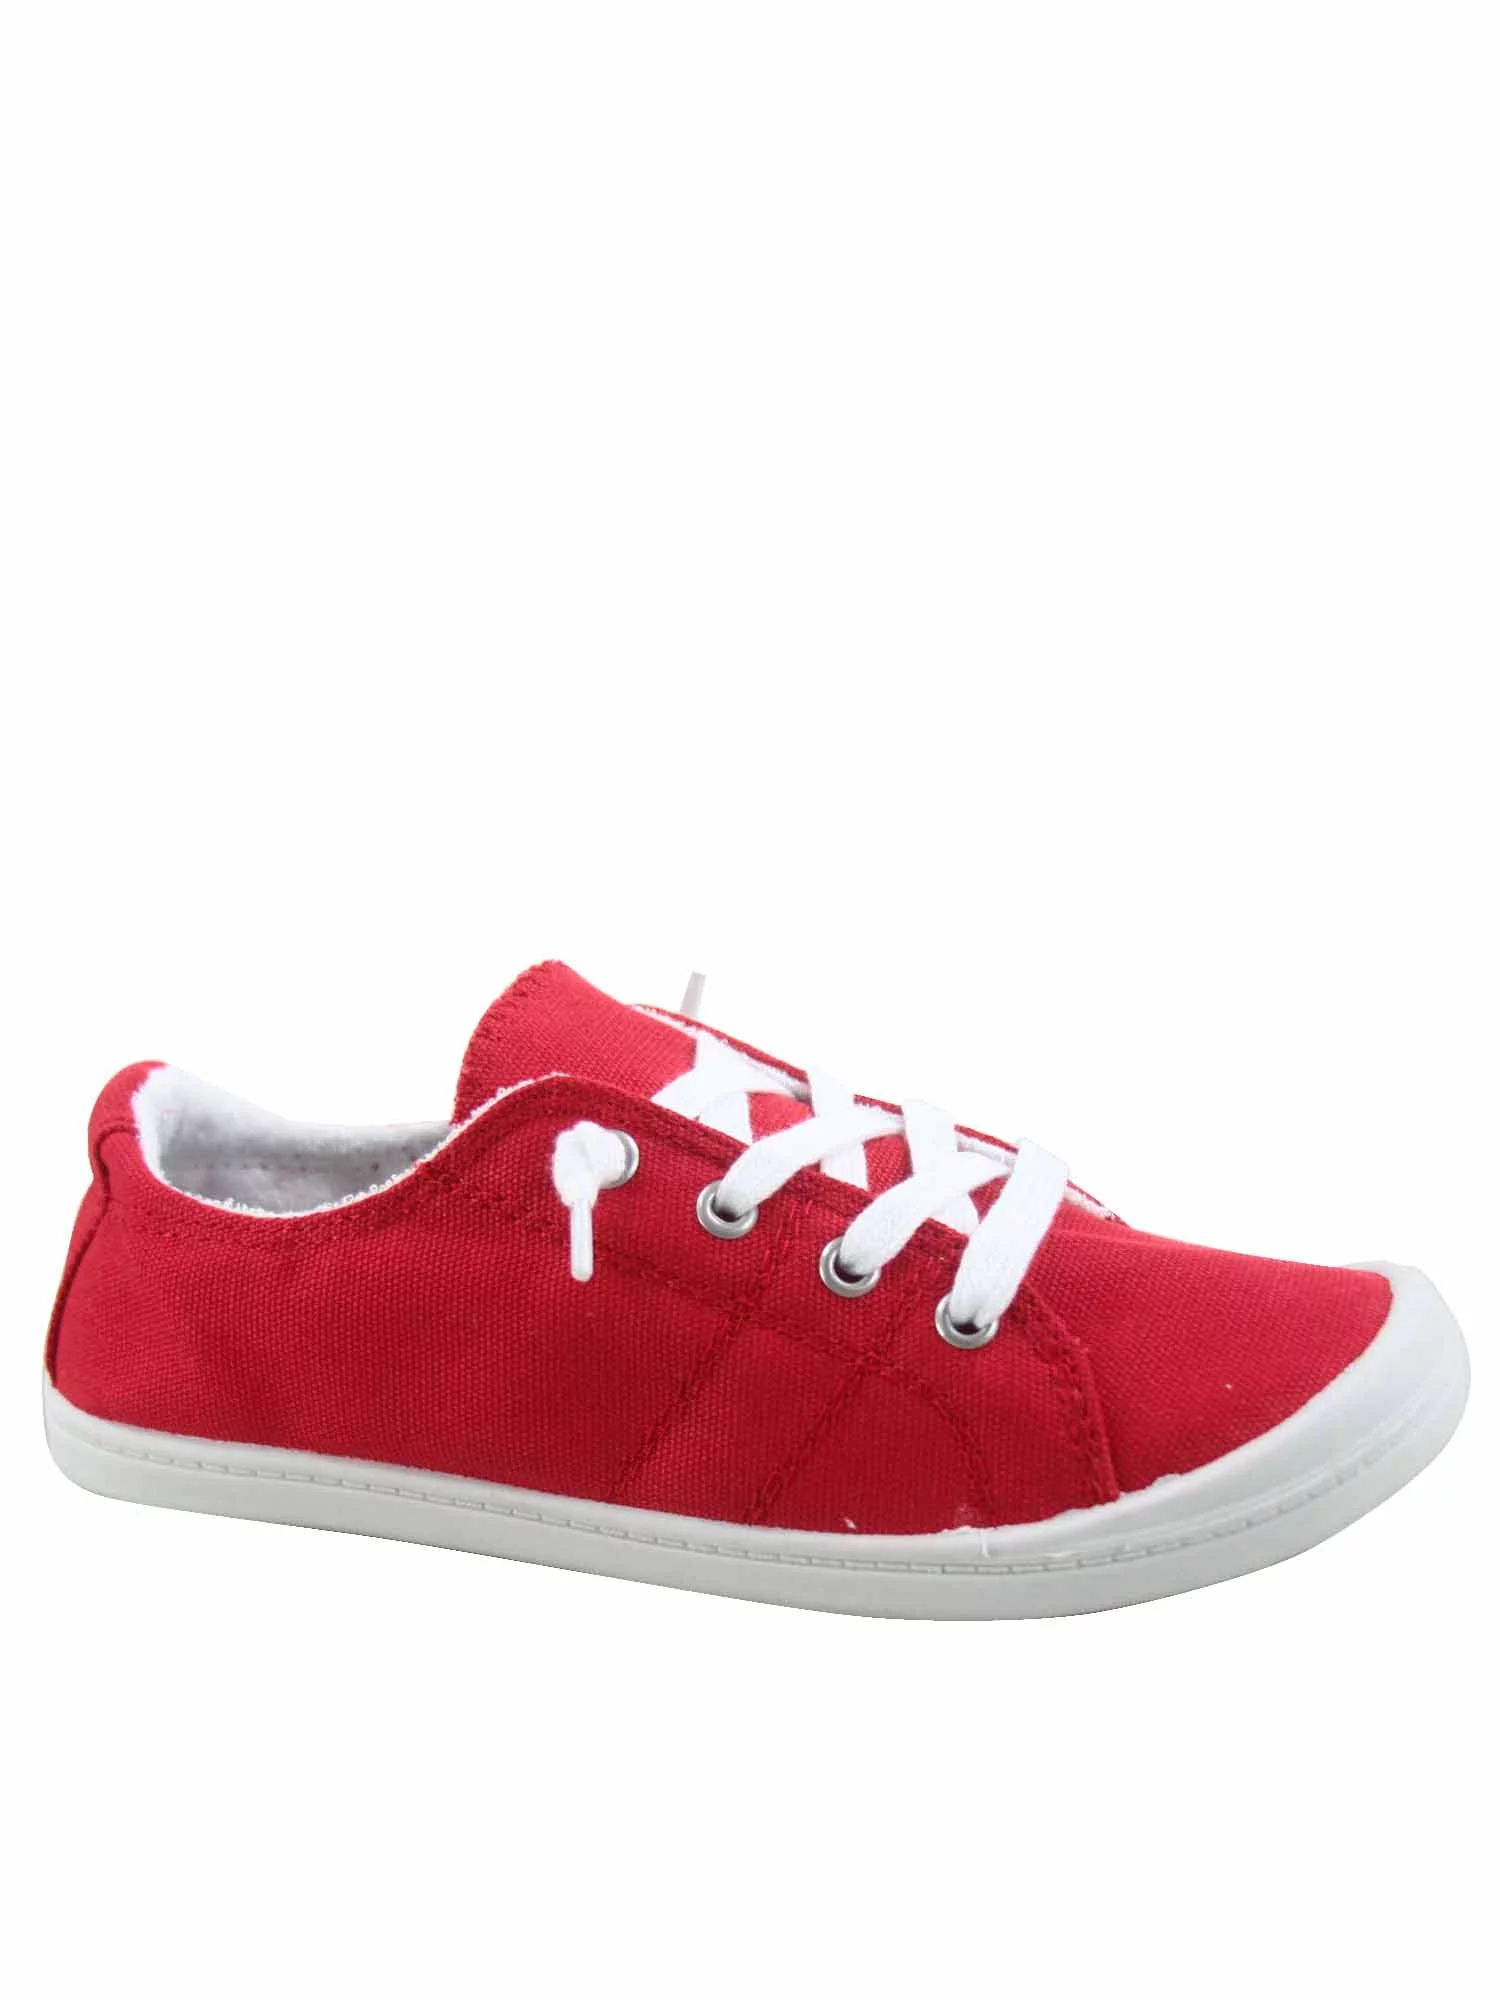 Zig-s Women's Causal Comfort Slip On Round Toe Flat Sneaker Shoes (Red, 9) | Walmart (US)